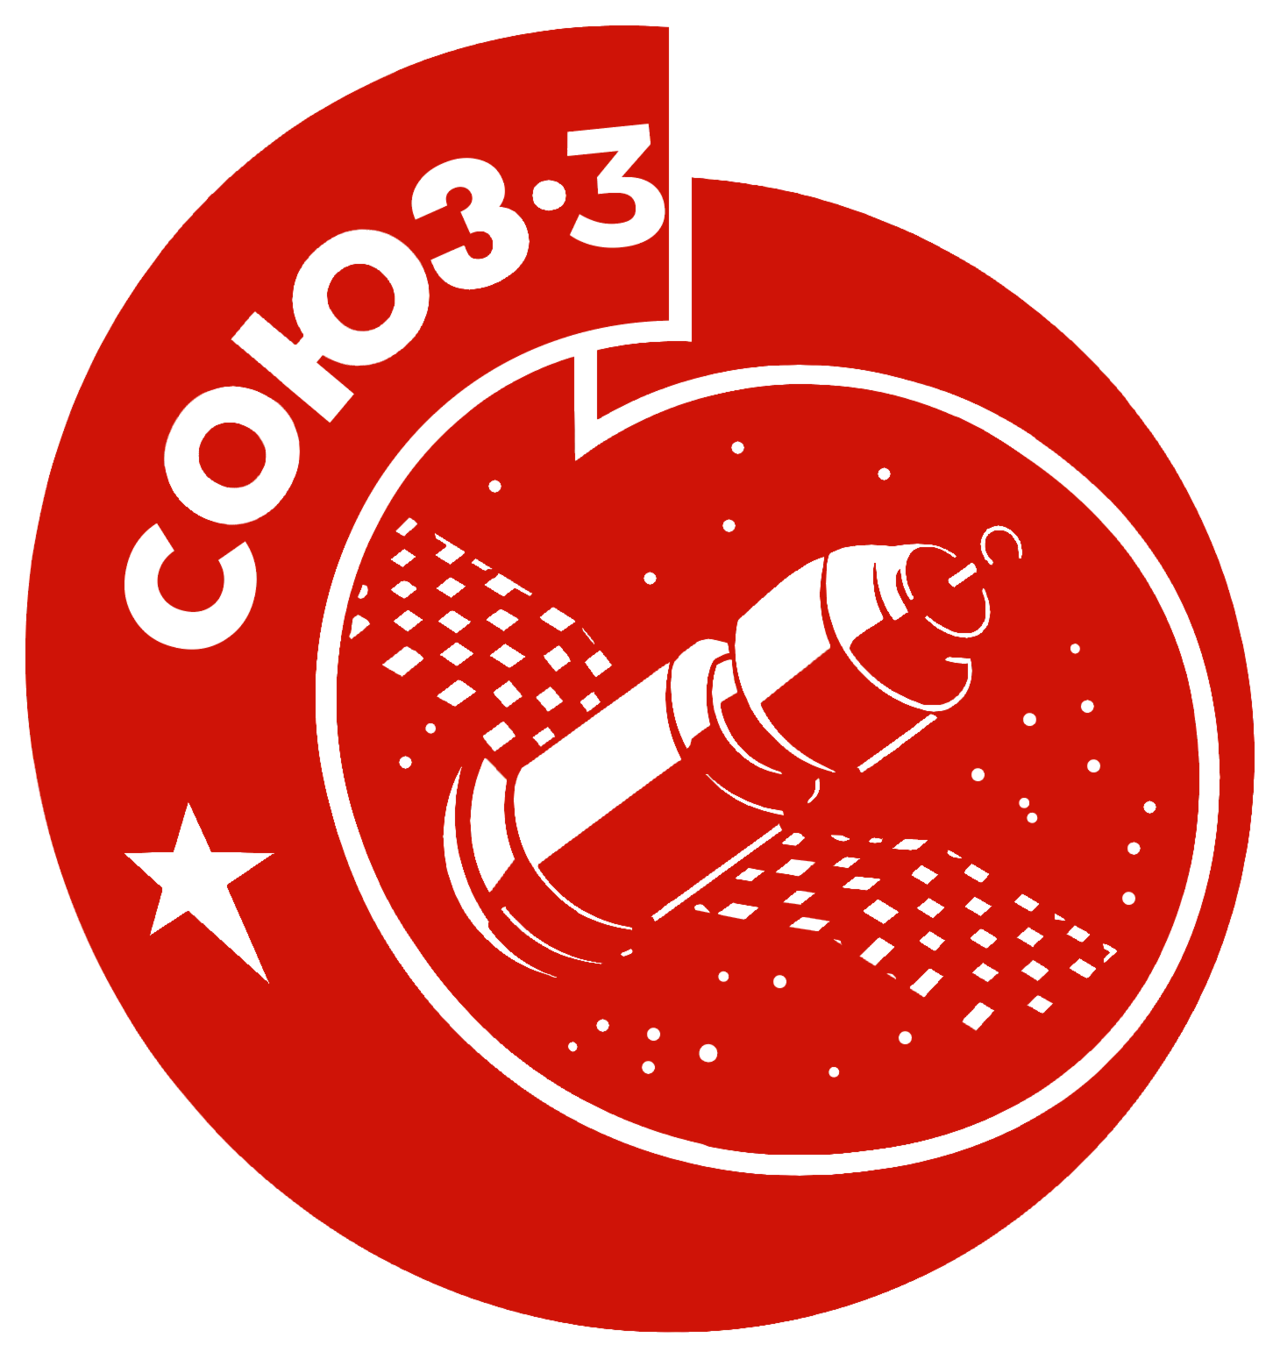 Mission patch for Soyuz 3